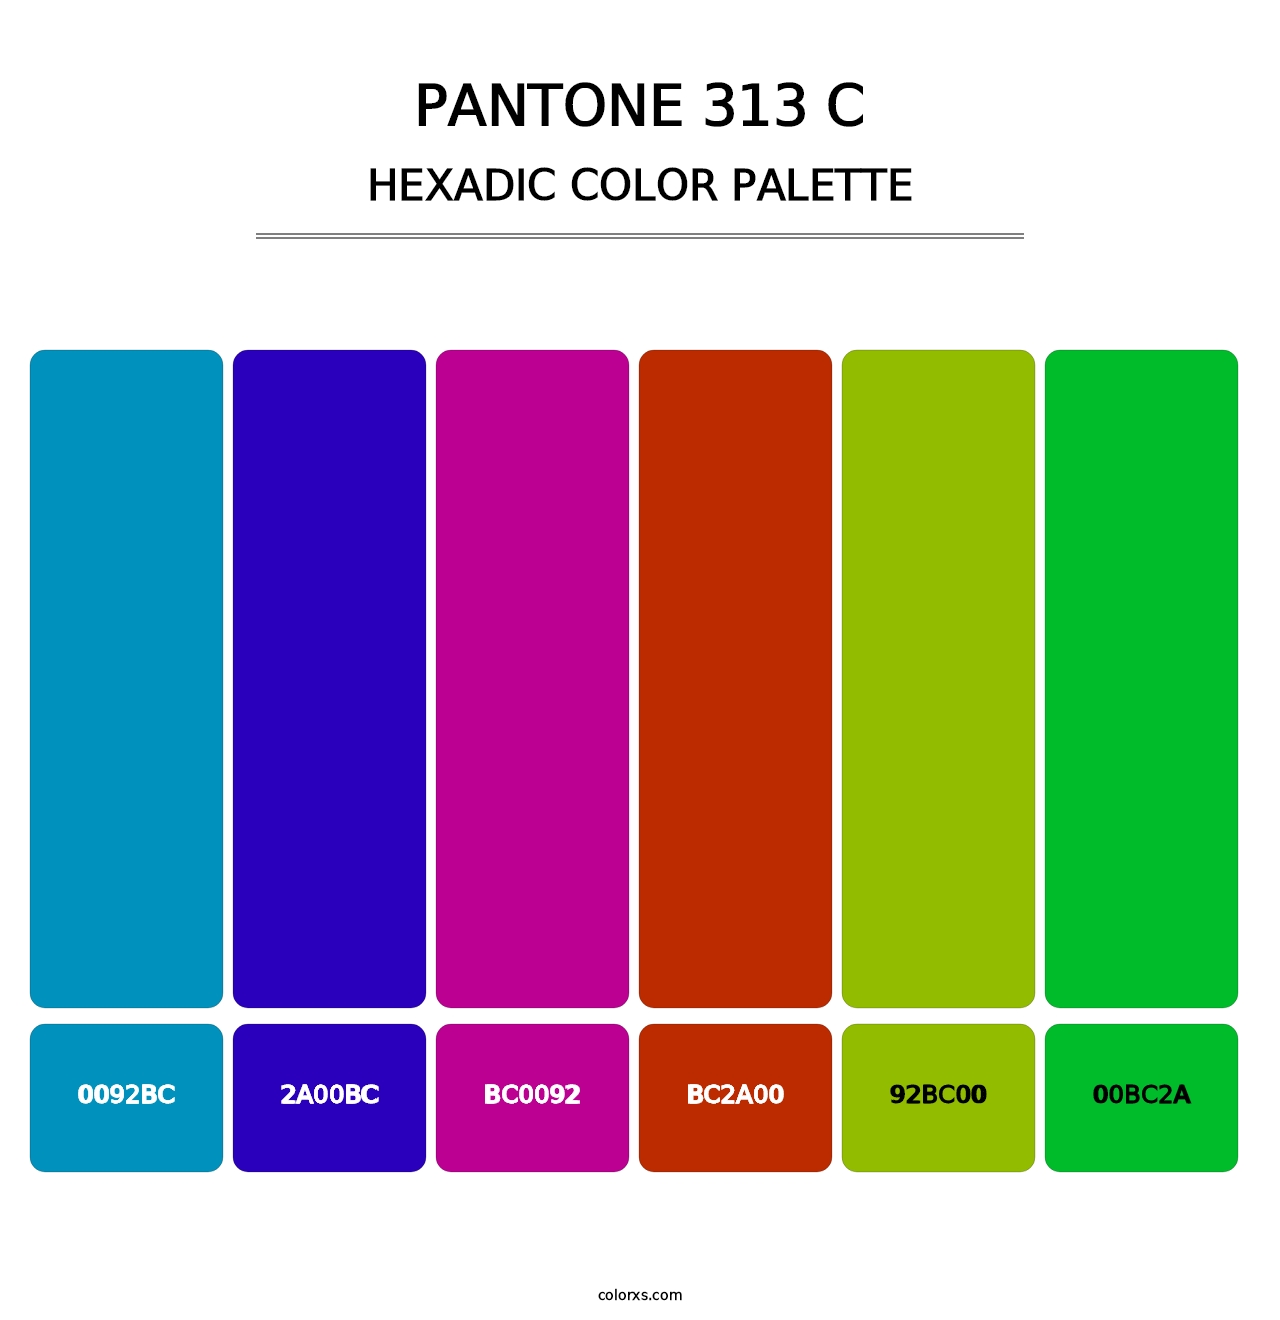 PANTONE 313 C - Hexadic Color Palette